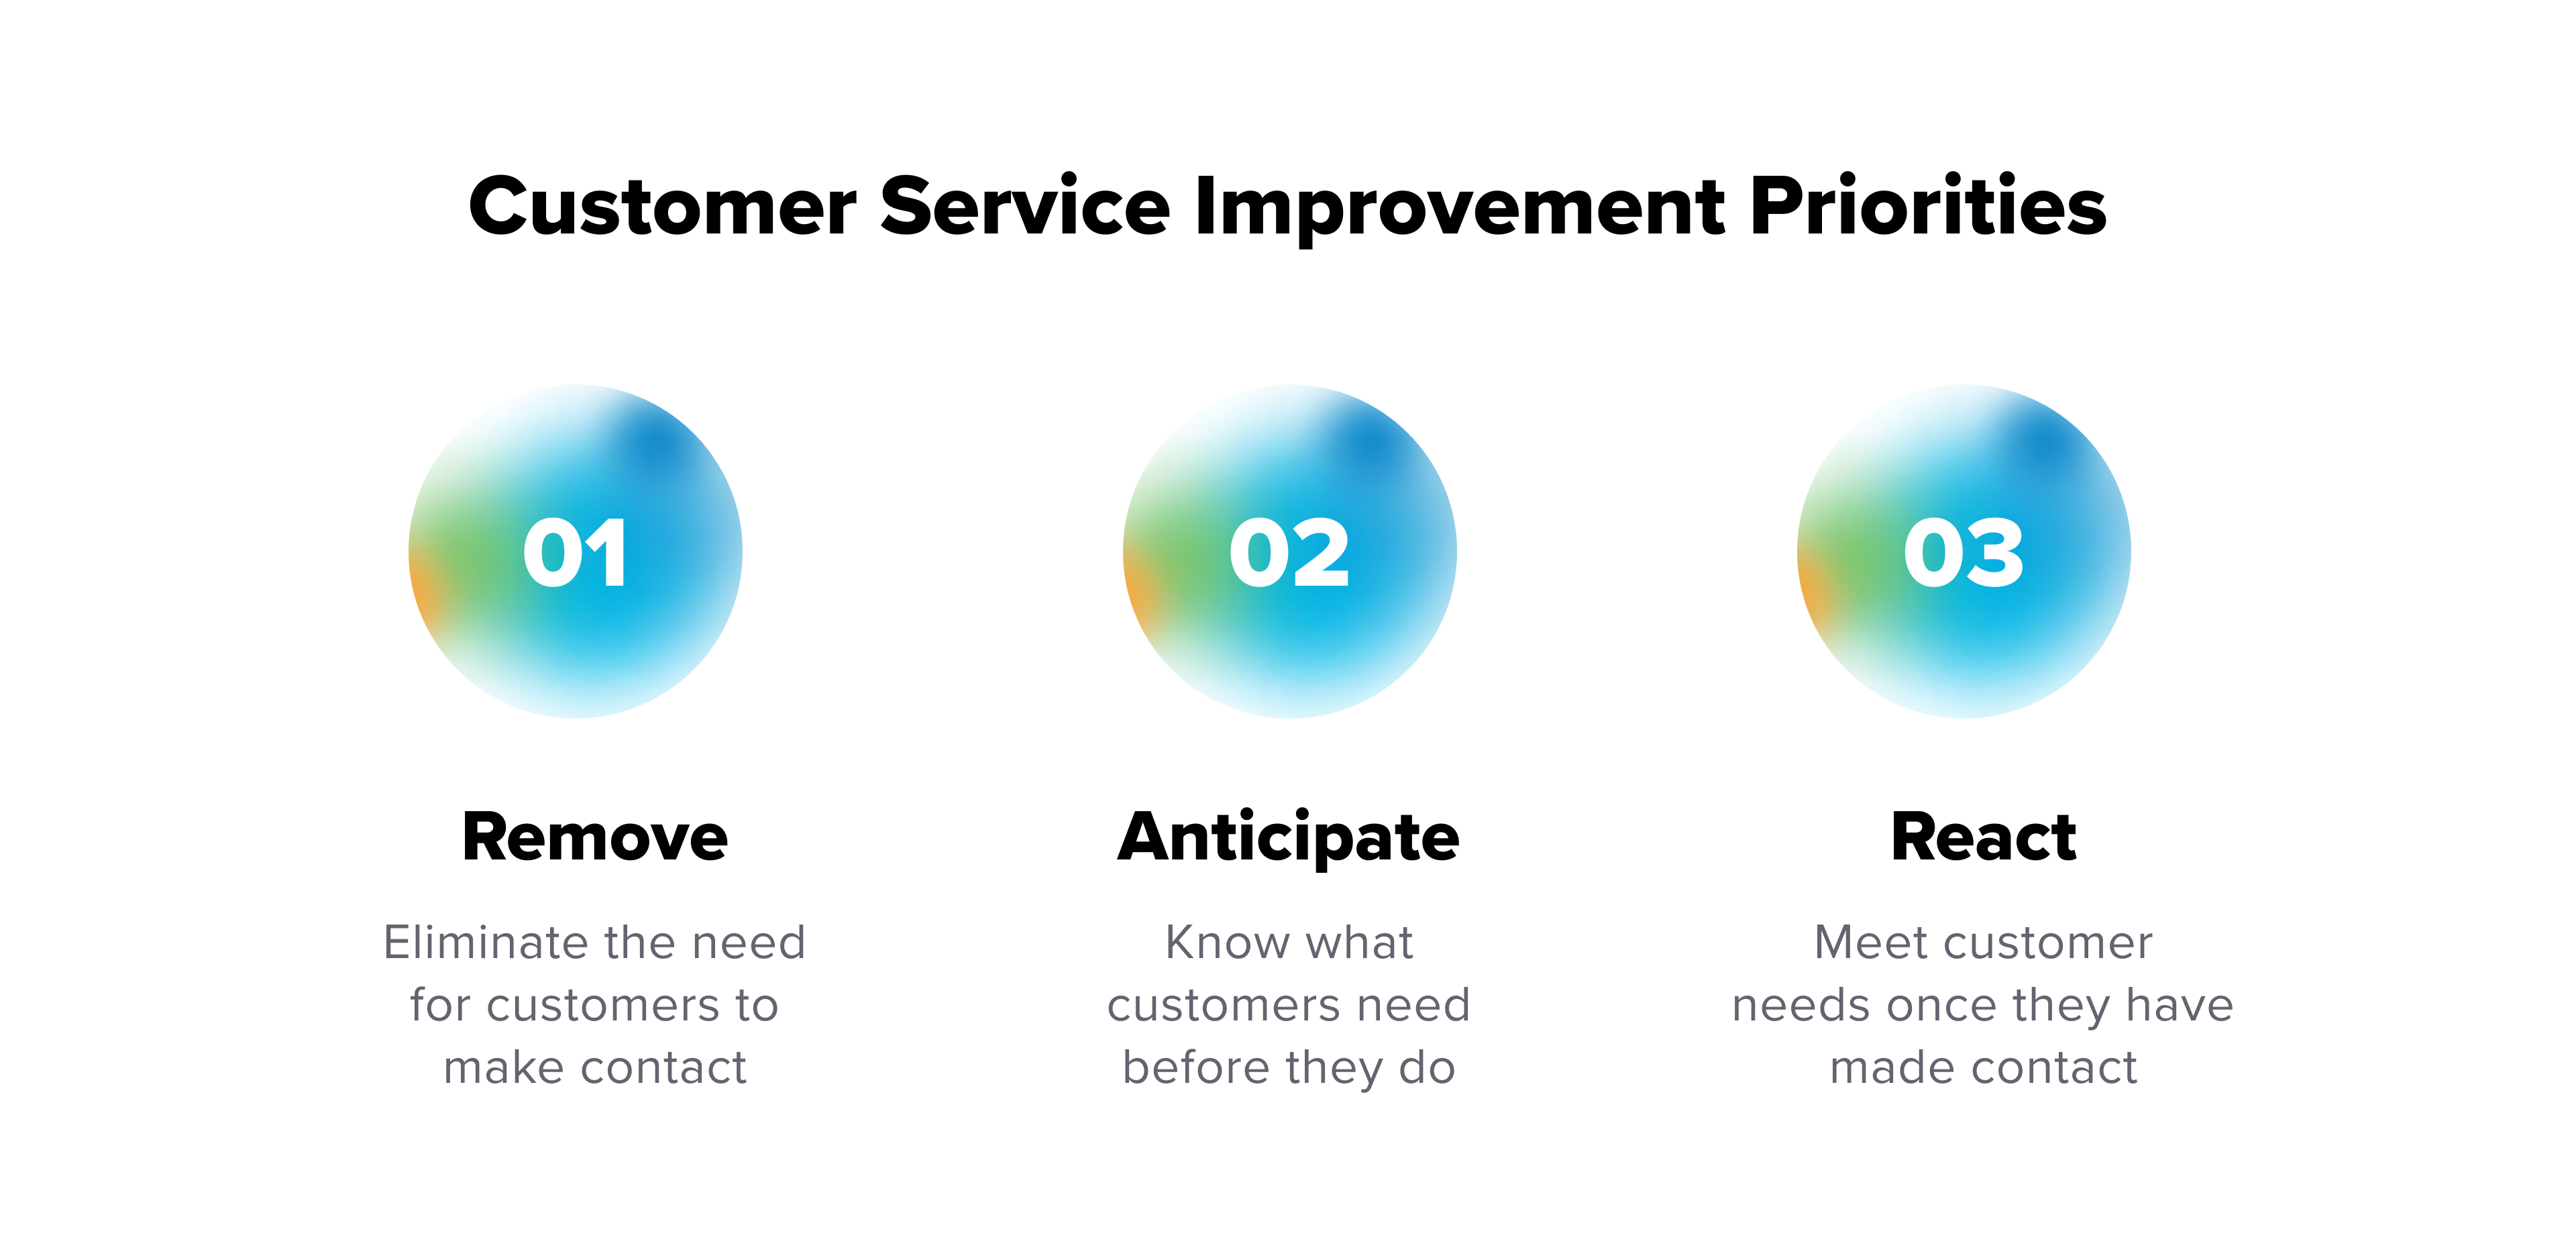 Customer Service Improvement Priorities